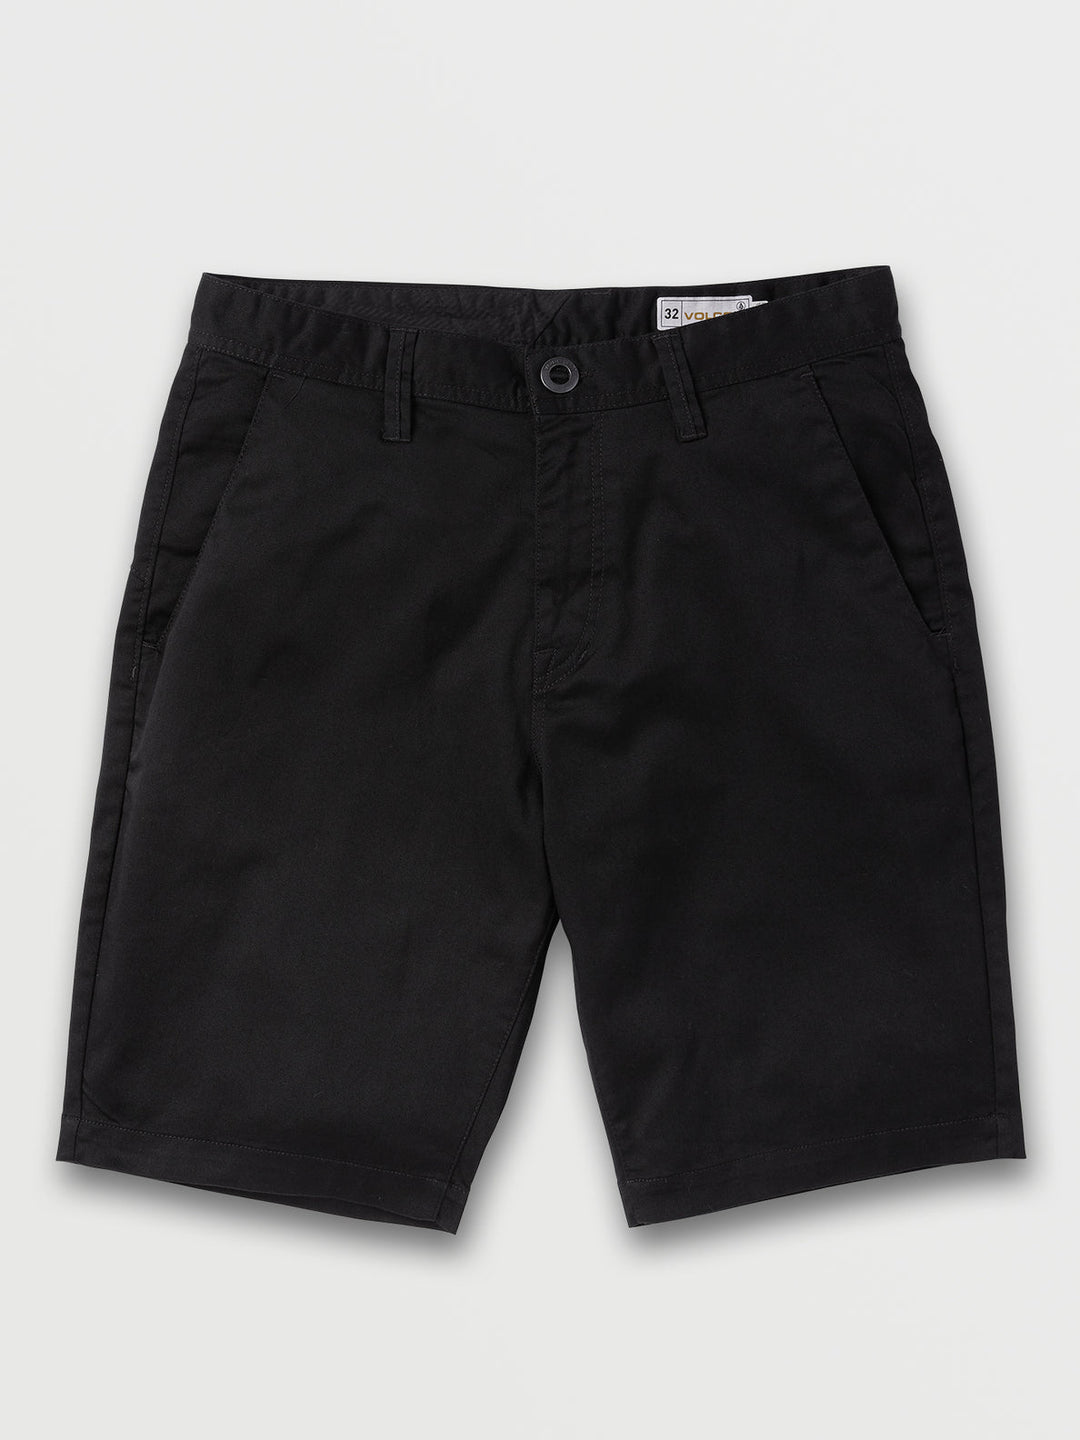 Volcom Frickin Modern Stretch Shorts - Black - Sun Diego Boardshop